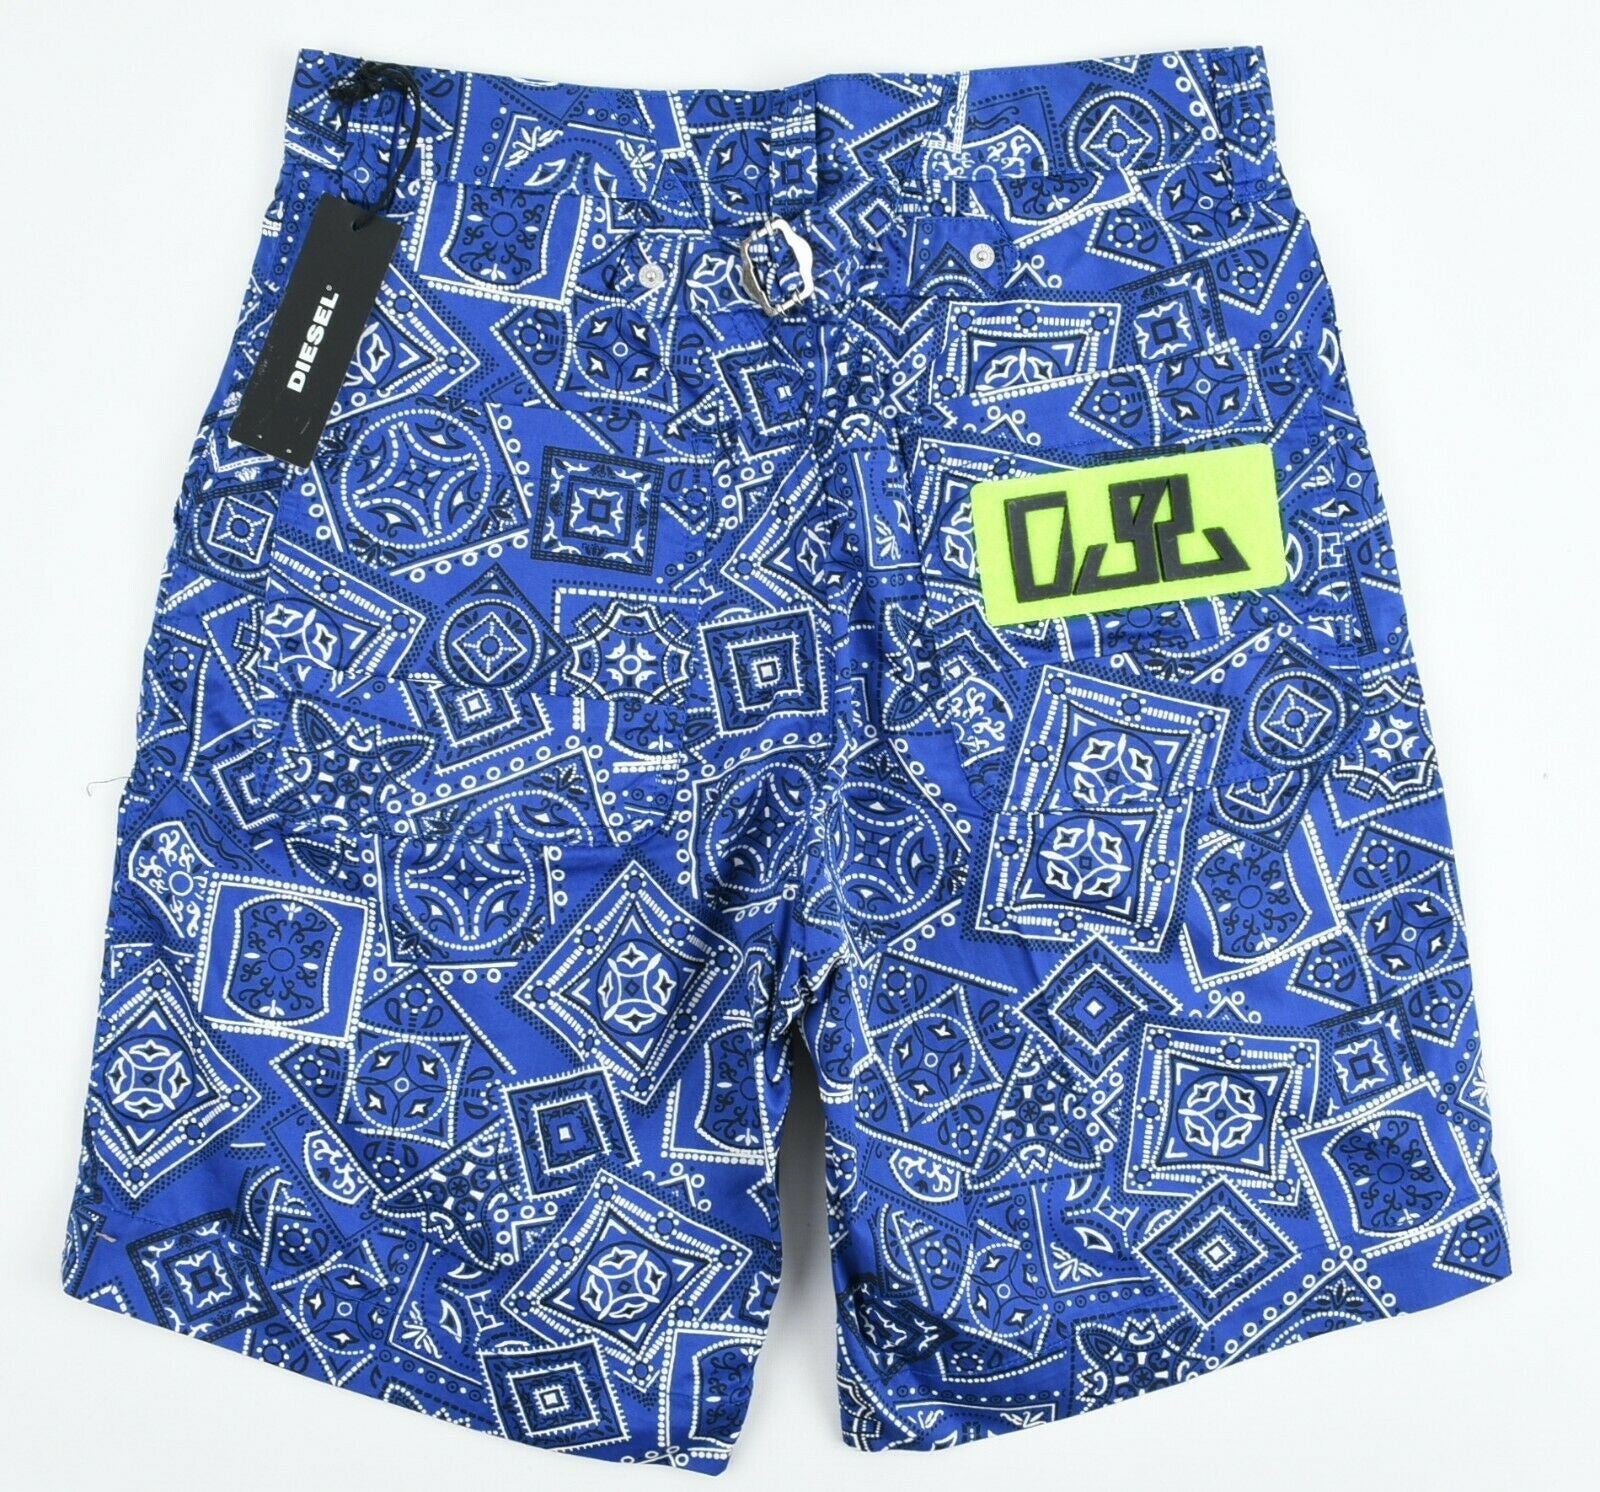 DIESEL Men's FRANK Shorts, Blue/Printed, size W28